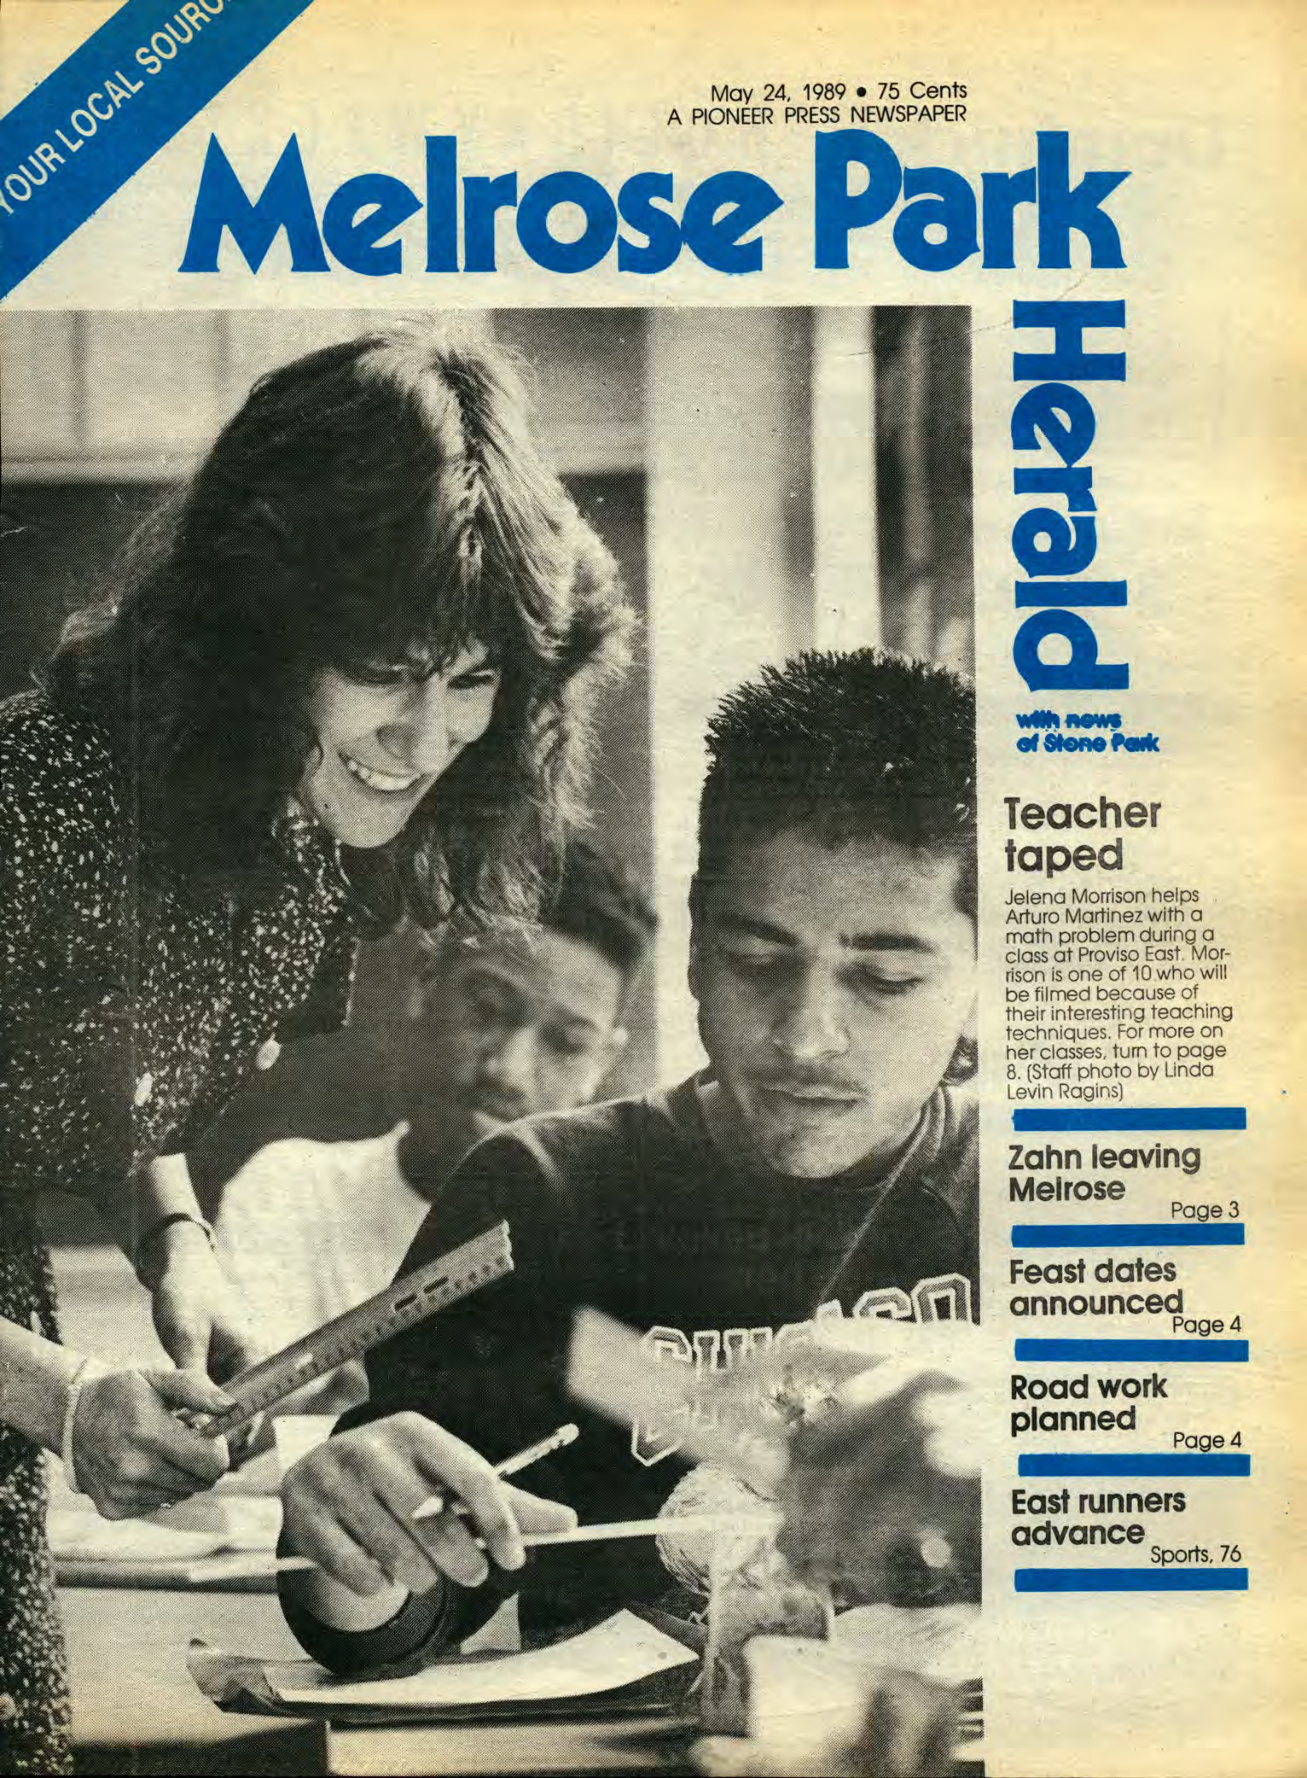 The Herald – 19890524